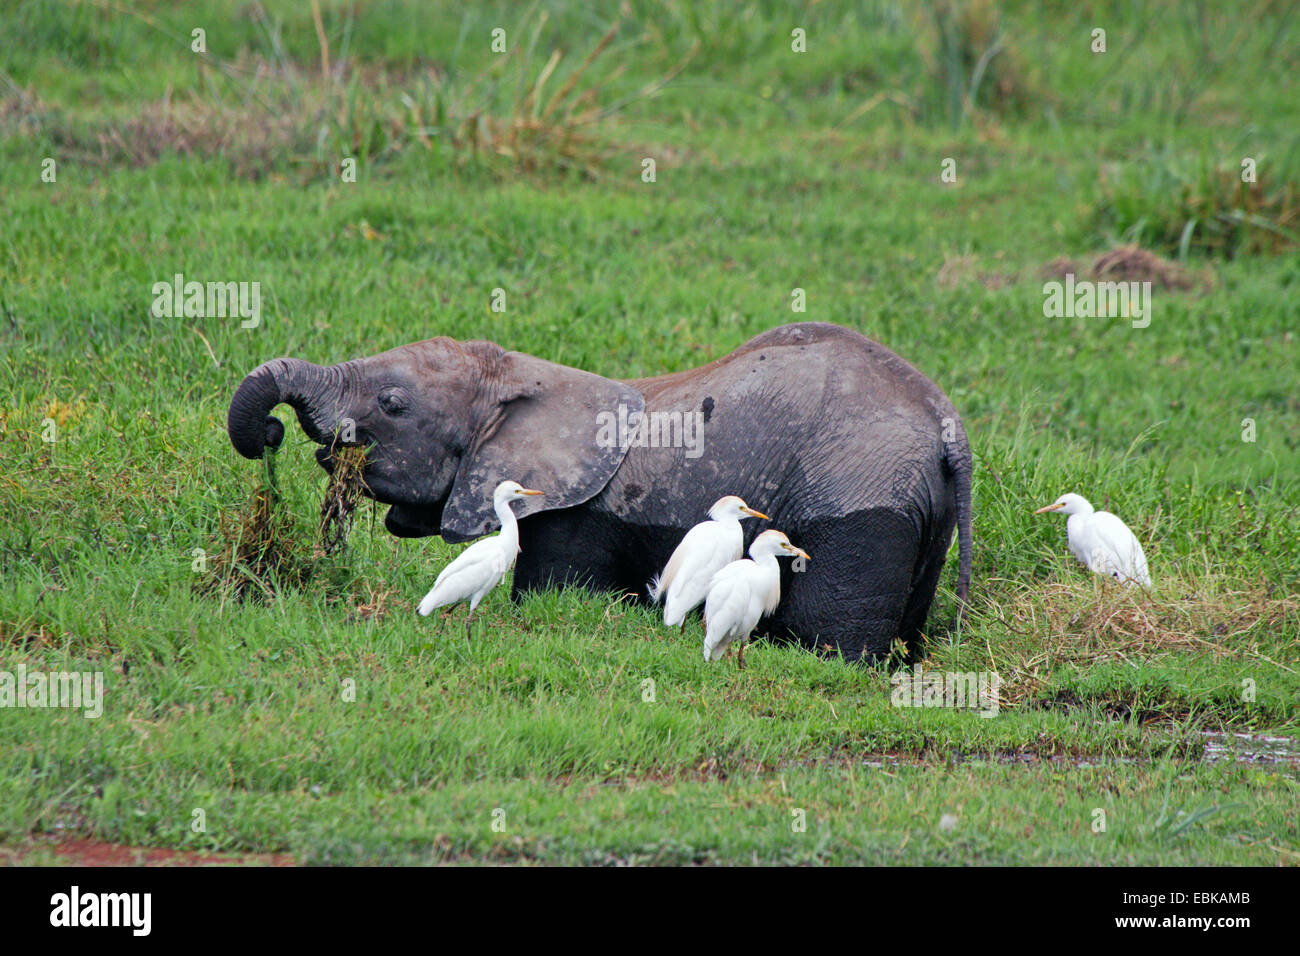 African elephant (Loxodonta africana), standing in a swamp an feeding grass, Kenya, Amboseli National Park Stock Photo